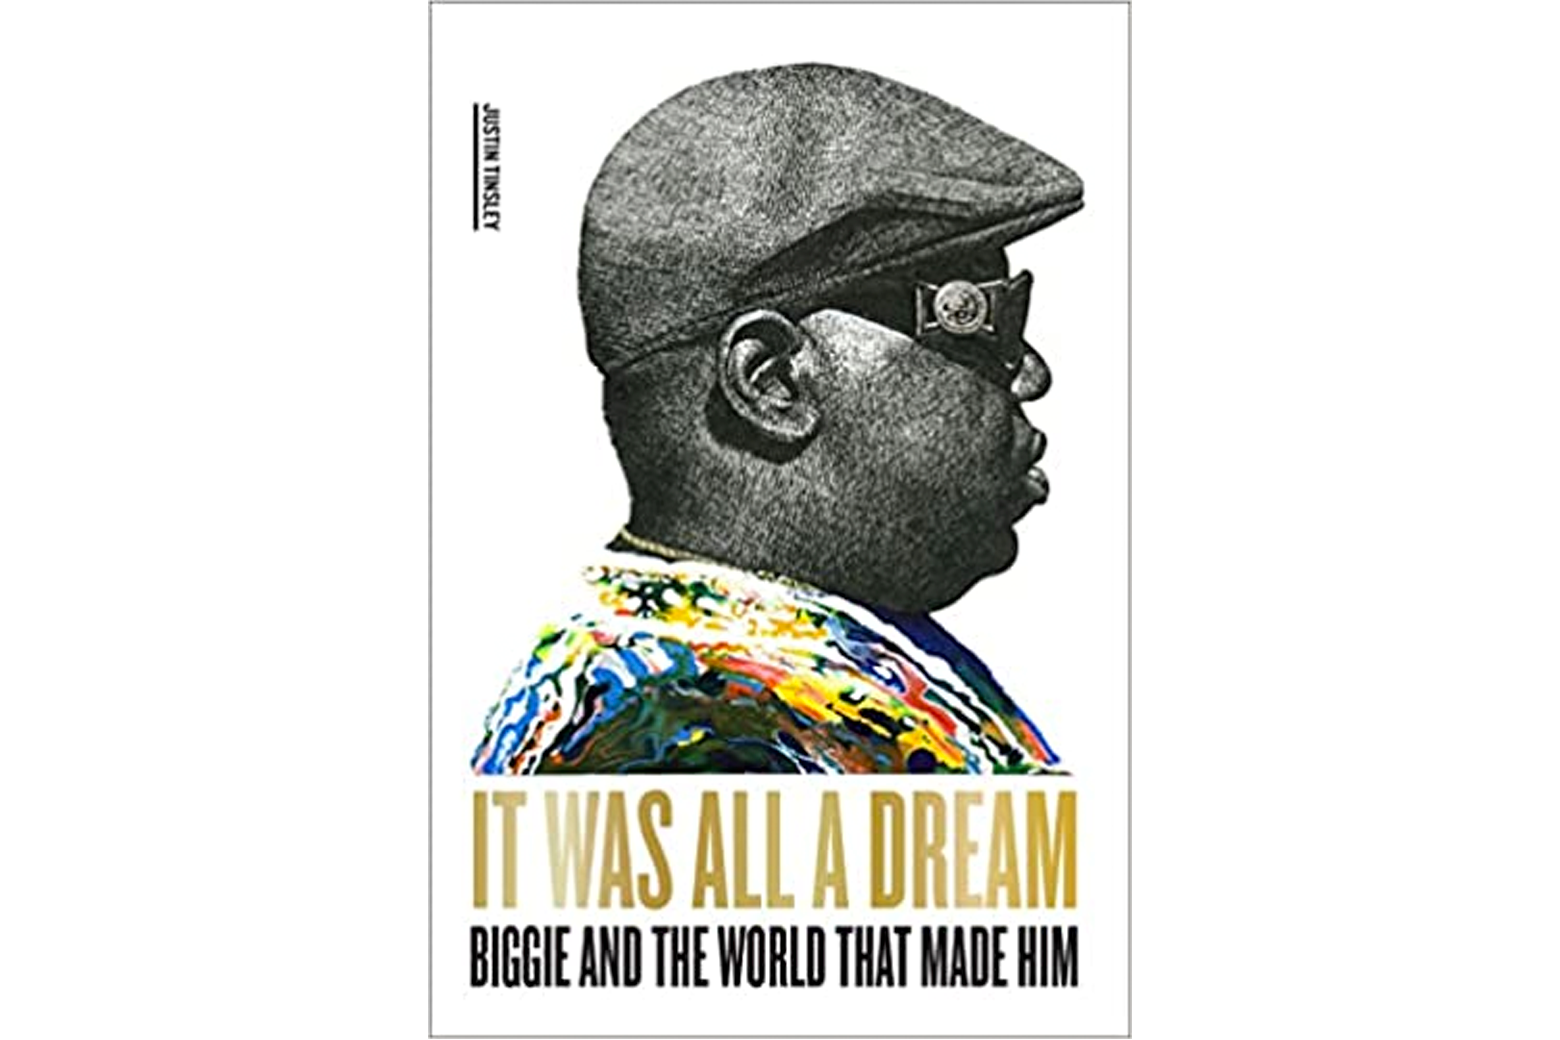 Book cover depicting Biggie in profile